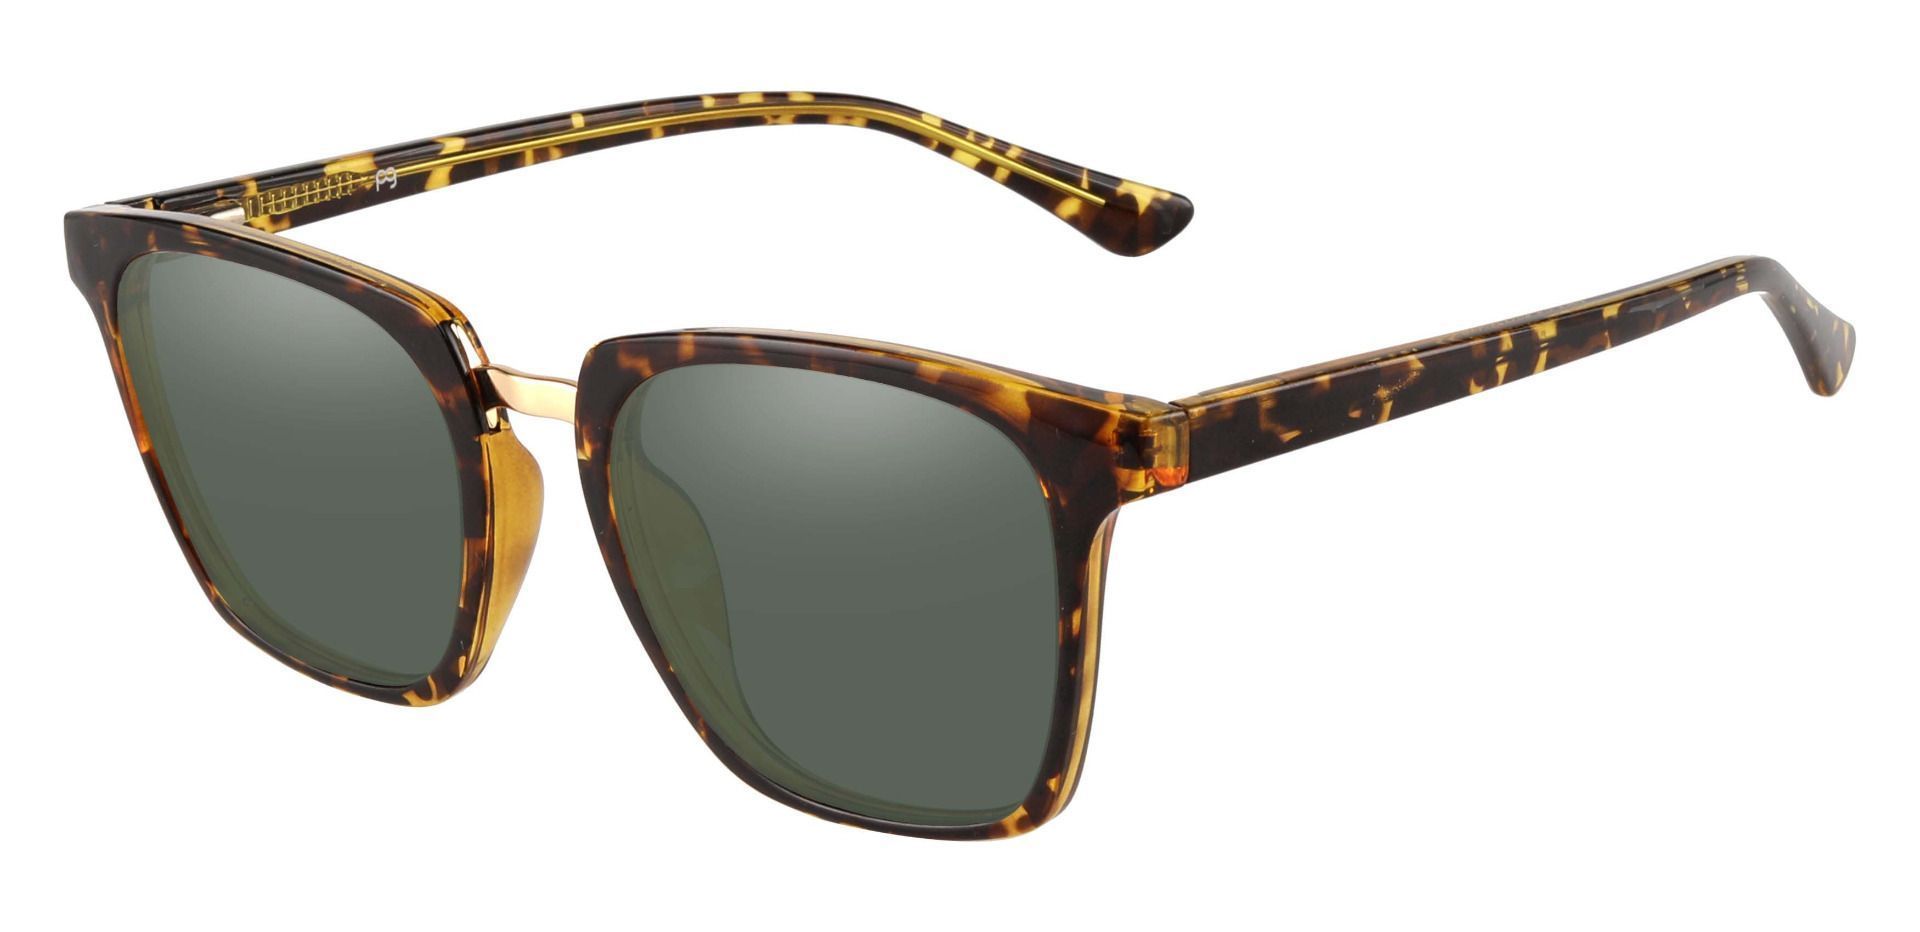 Delta Square Non-Rx Sunglasses - Tortoise Frame With Green Lenses